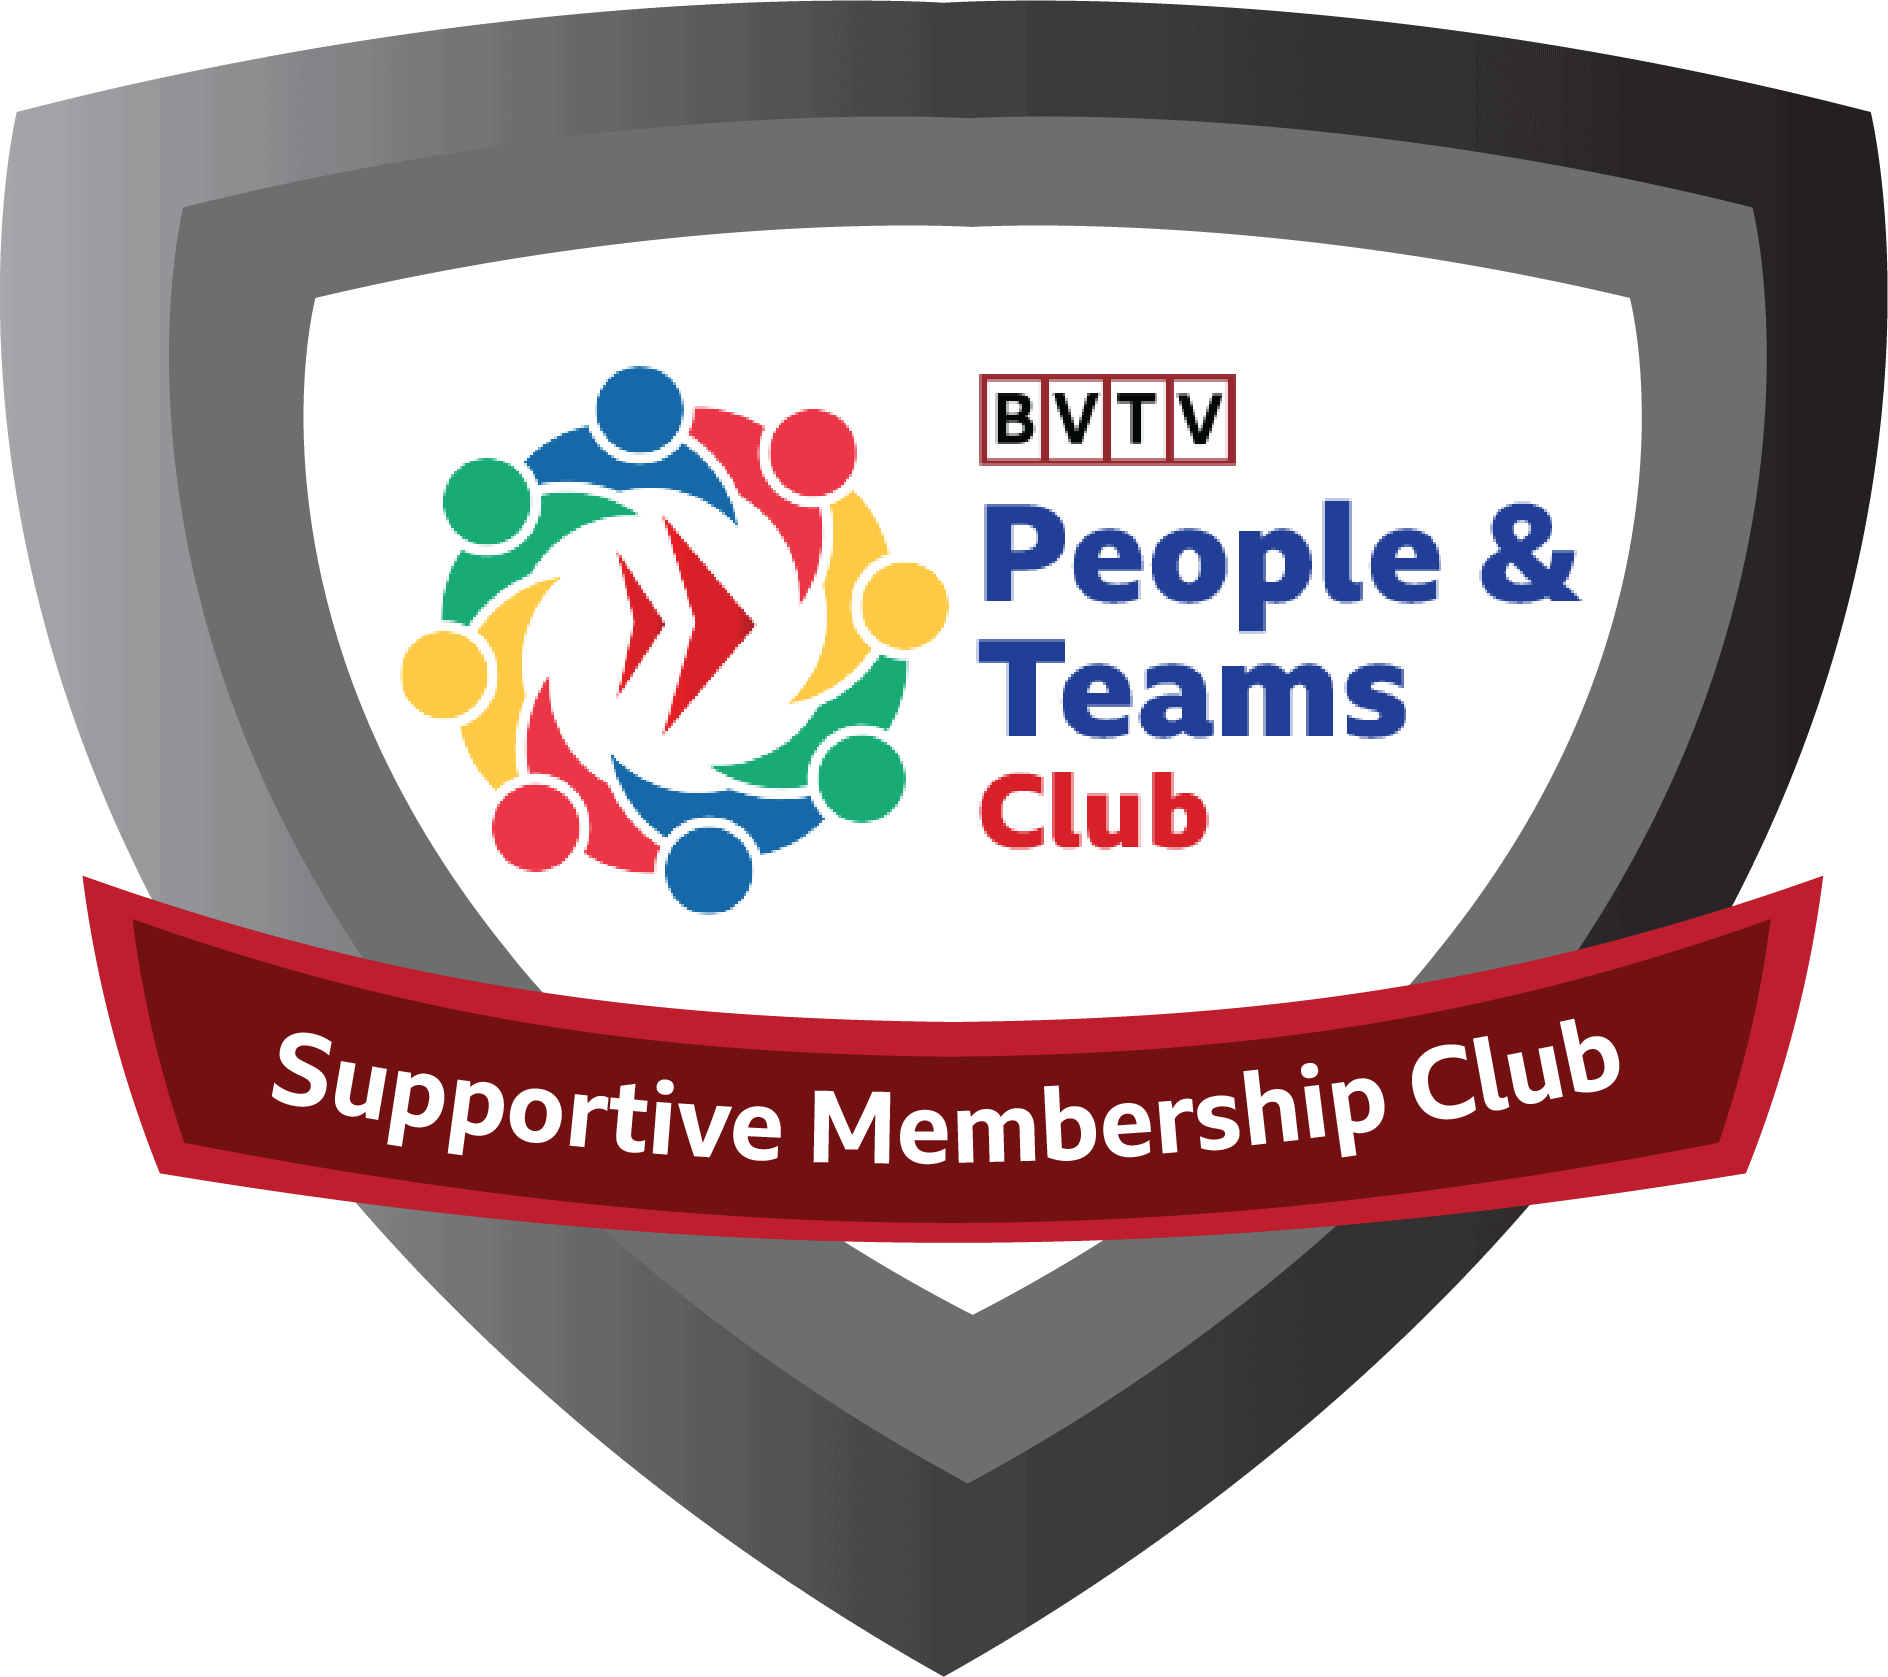 BVTV People & Teams Club at www.bizvision.co.uk